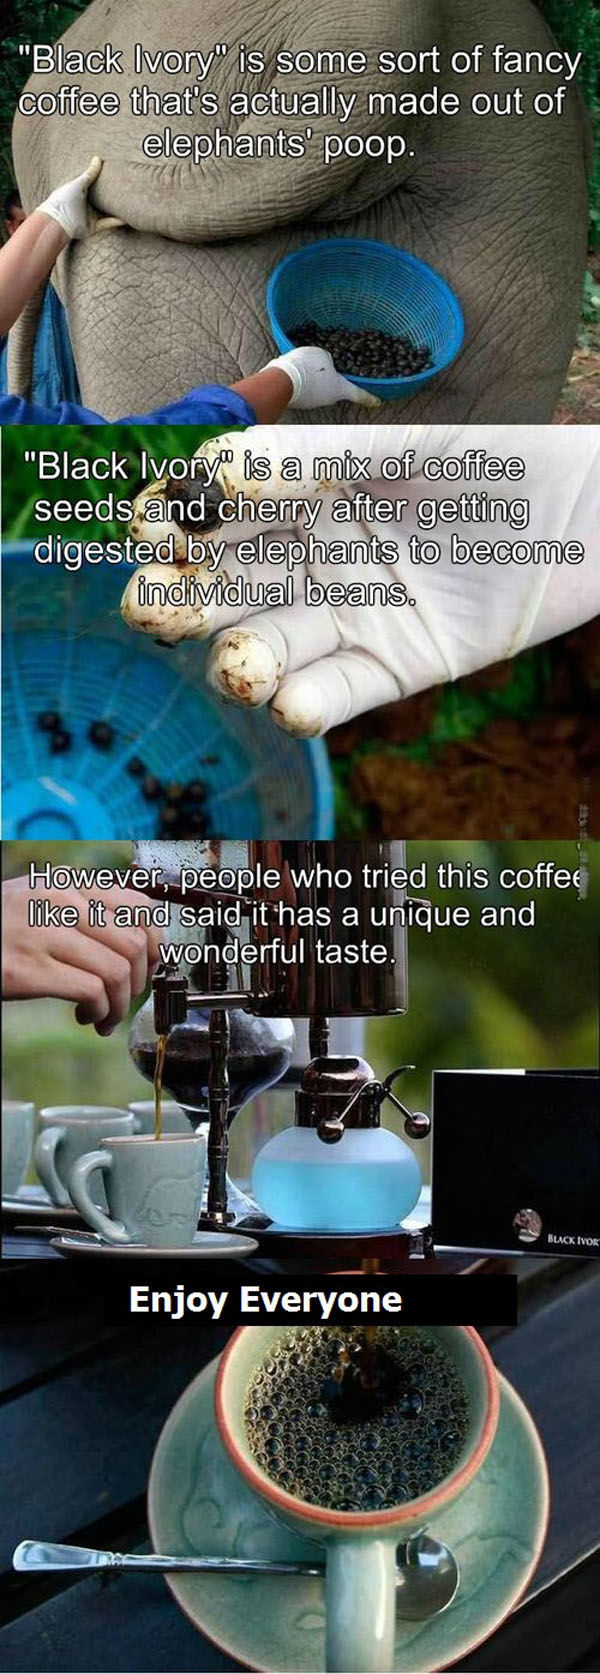 “Black Ivory” Coffee Has a Very Suspicious Origin